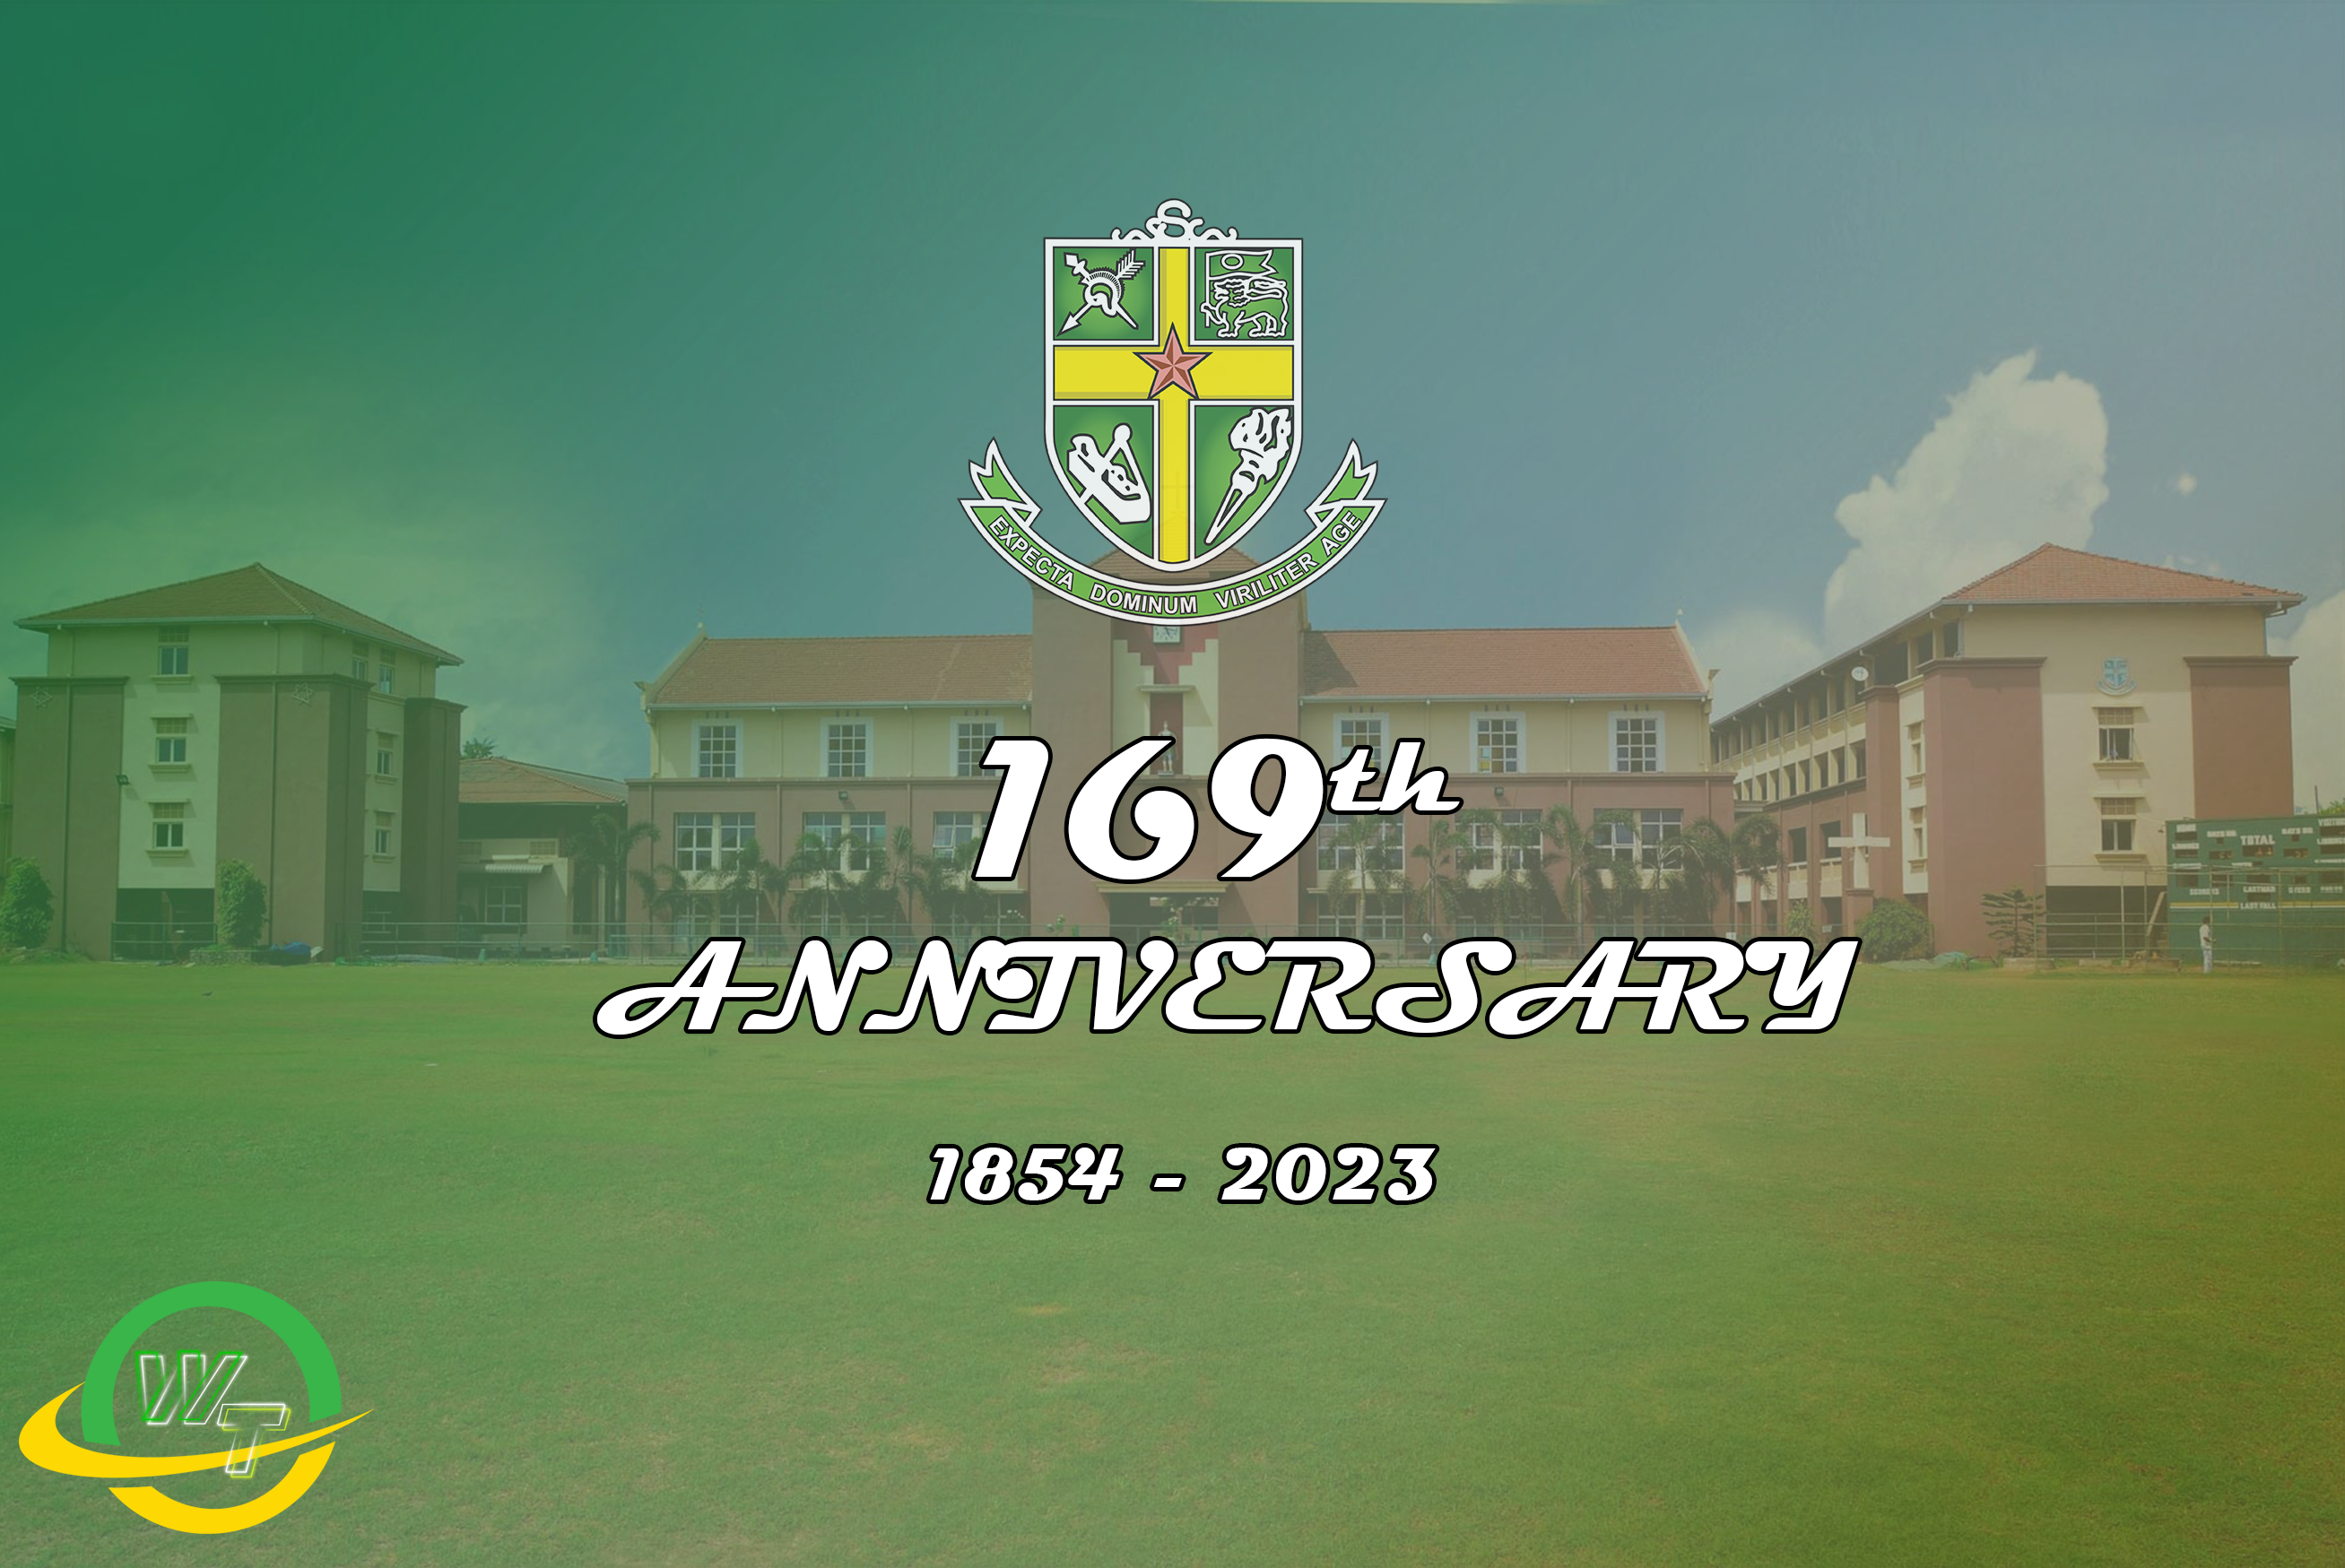 169 Anniiversary of the College